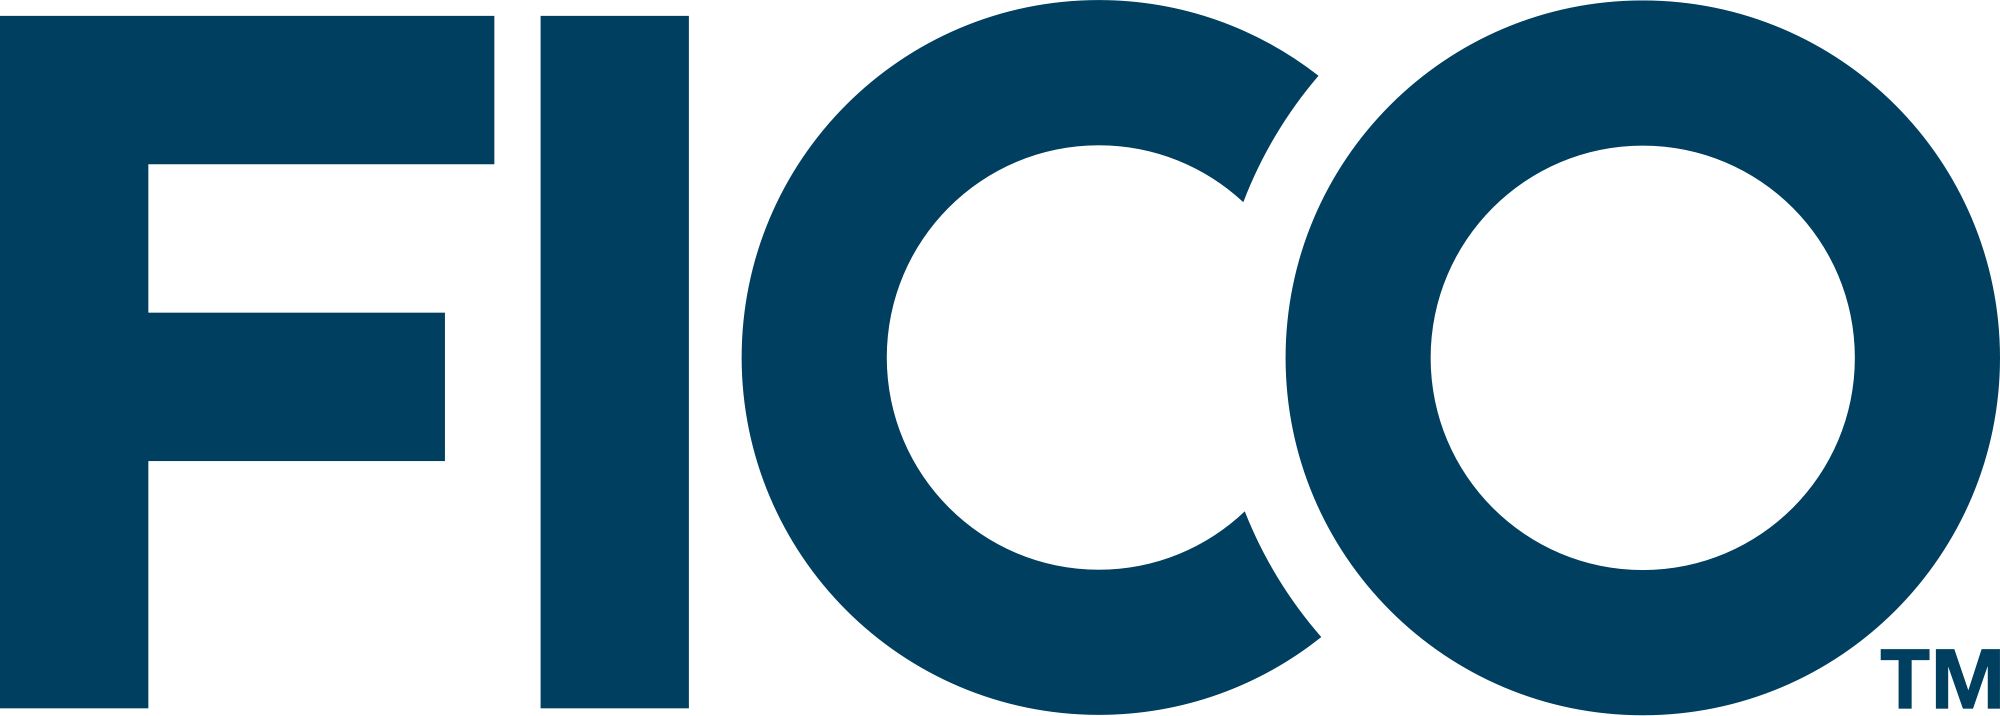 FICO logo.png